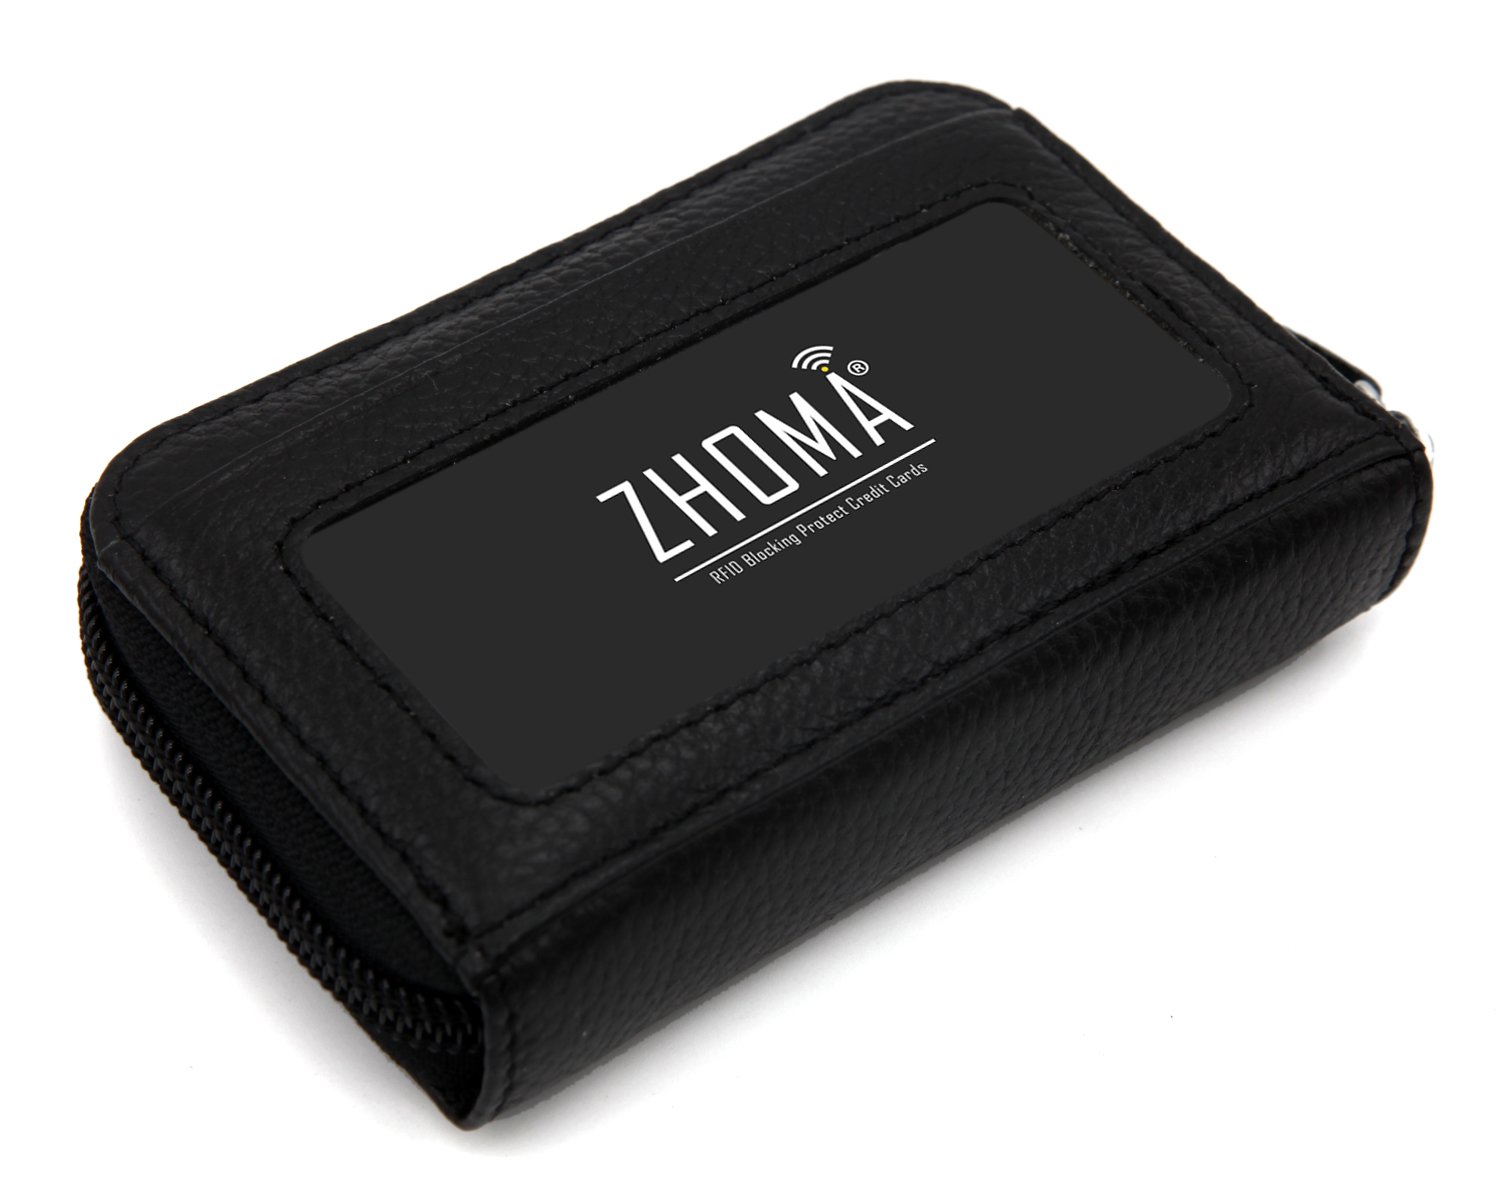 ZHOMA RFID Blocking Genuine Leather Credit Card Case Holder Security Travel Wallet - Black